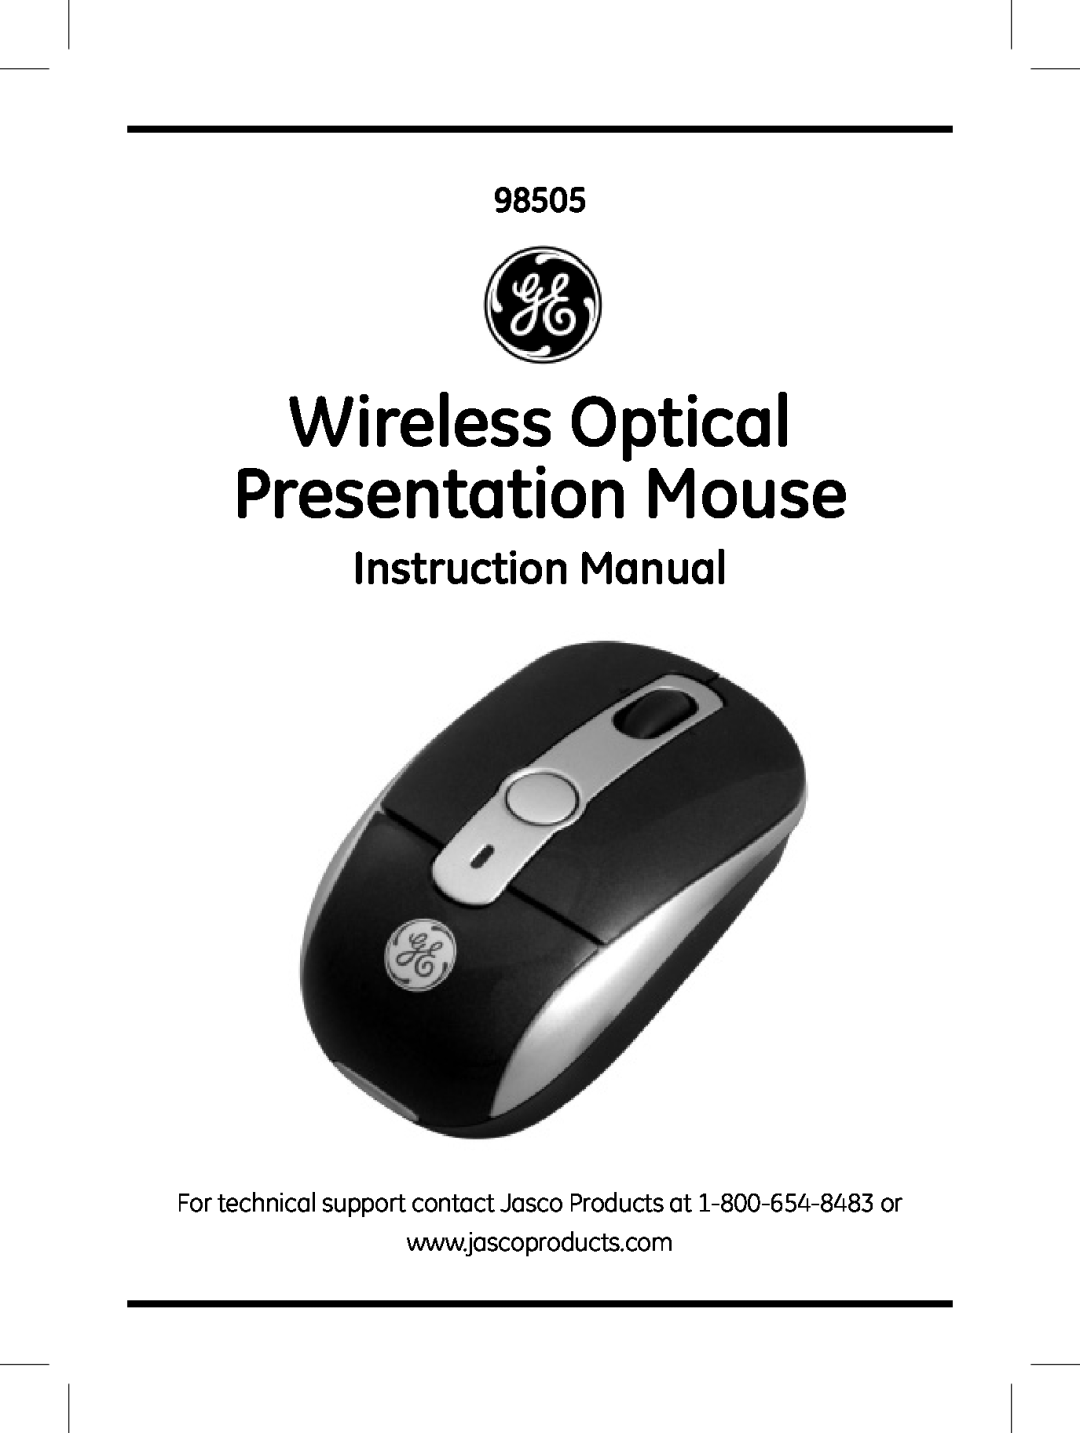 Jasco 98505 instruction manual Wireless Optical Presentation Mouse, Instruction Manual 